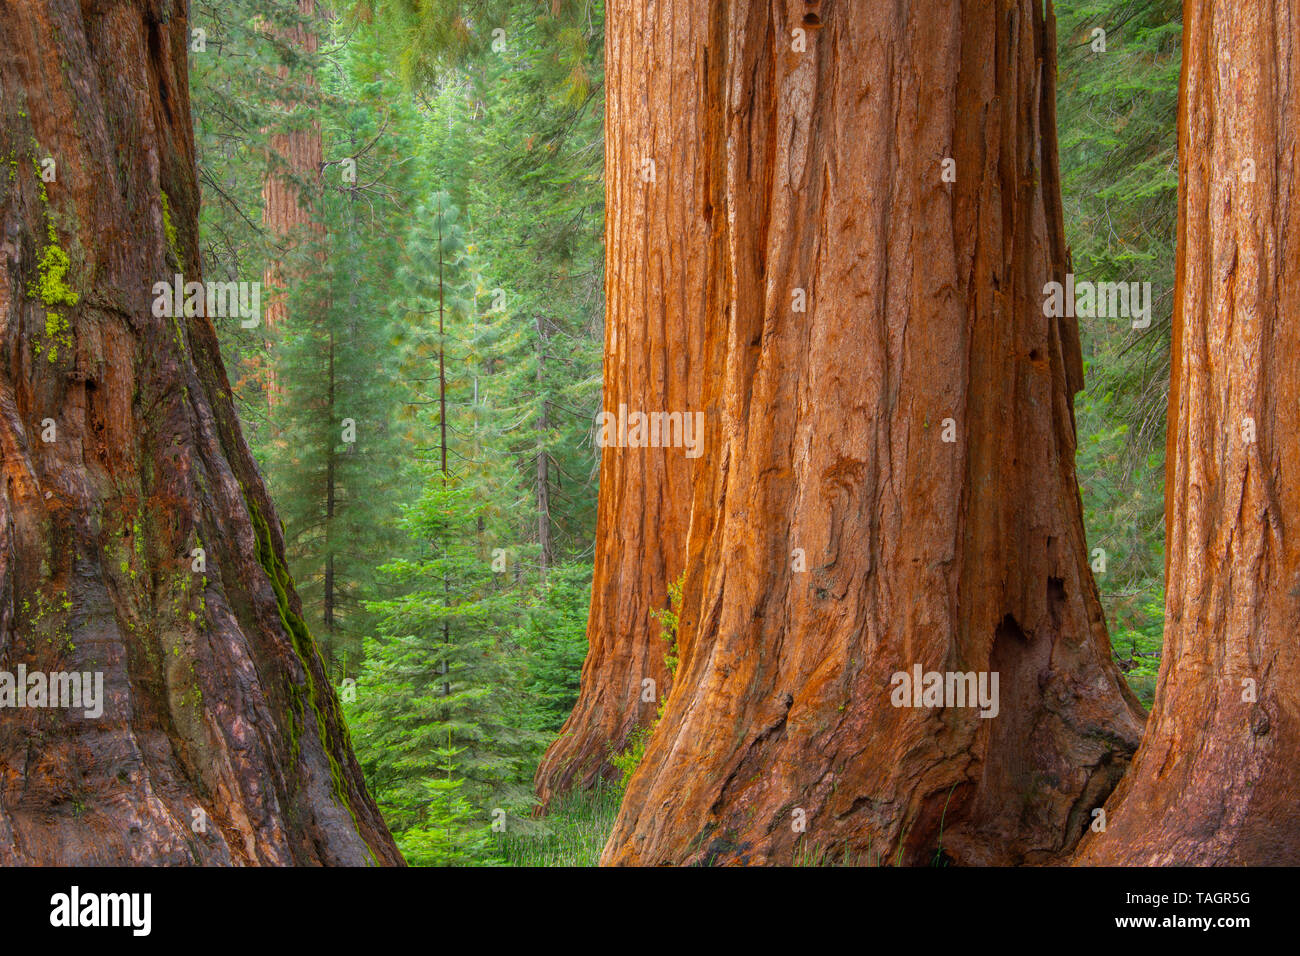 Mammutbäume (sequoiadendron giganteum), Mariposa Grove, Yosemite NP, Kalifornien, USA, von Bill Lea/Dembinsky Foto Assoc Stockfoto